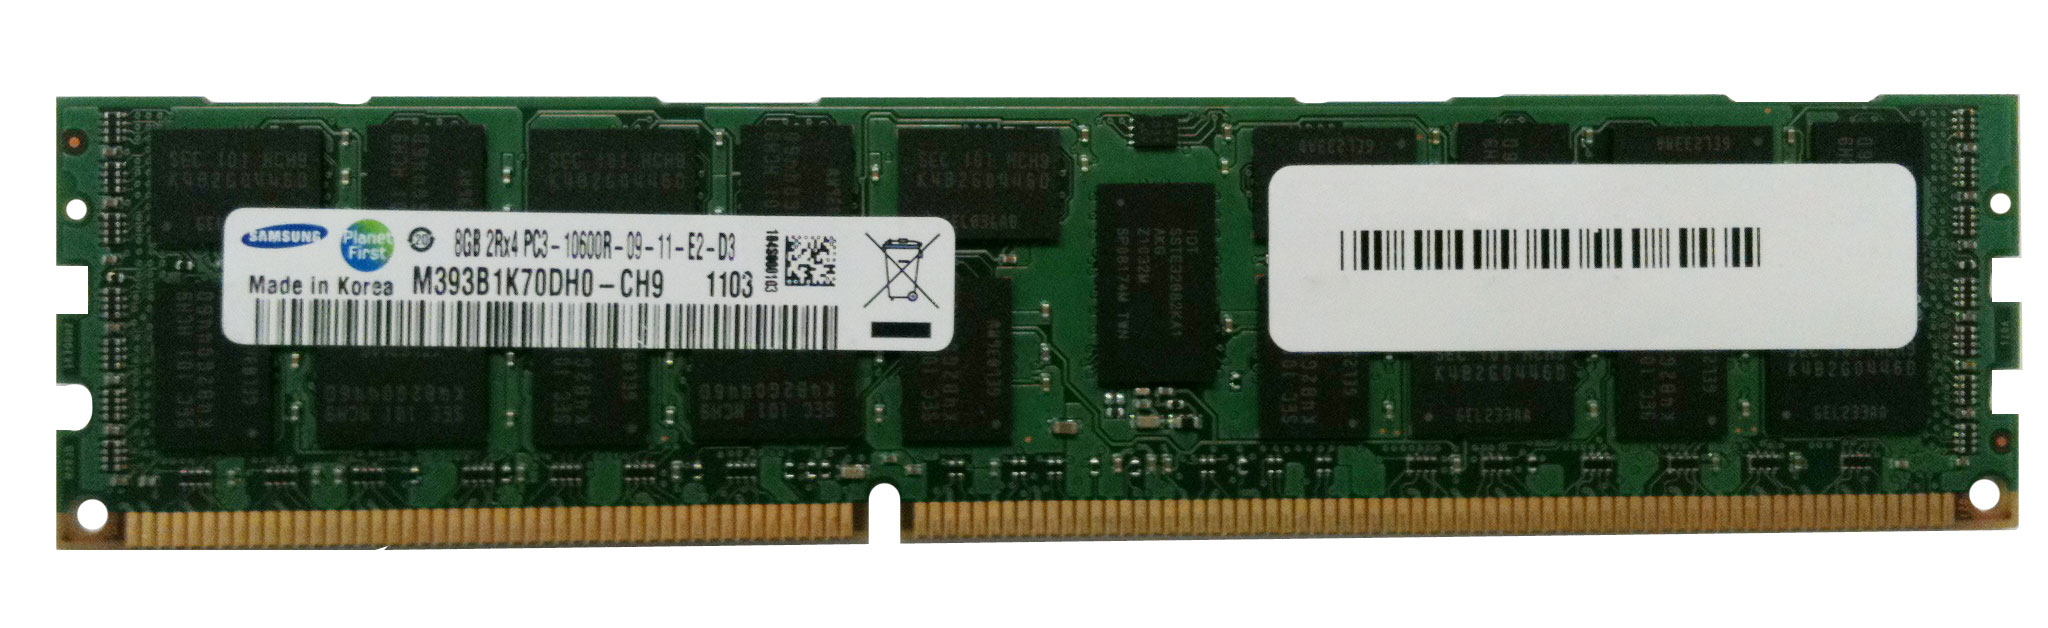 3D-13D338R24973-24G 24GB Kit (3 x 8GB) DDR3 PC3-10600 CL=9 Registered ECC w/Parity DDR3-1333 Dual Rank, x4 1.5V 1024Meg x 72 for HP/Compaq ProLiant DL380 G7 CTO (583914-B21) 500662-24G